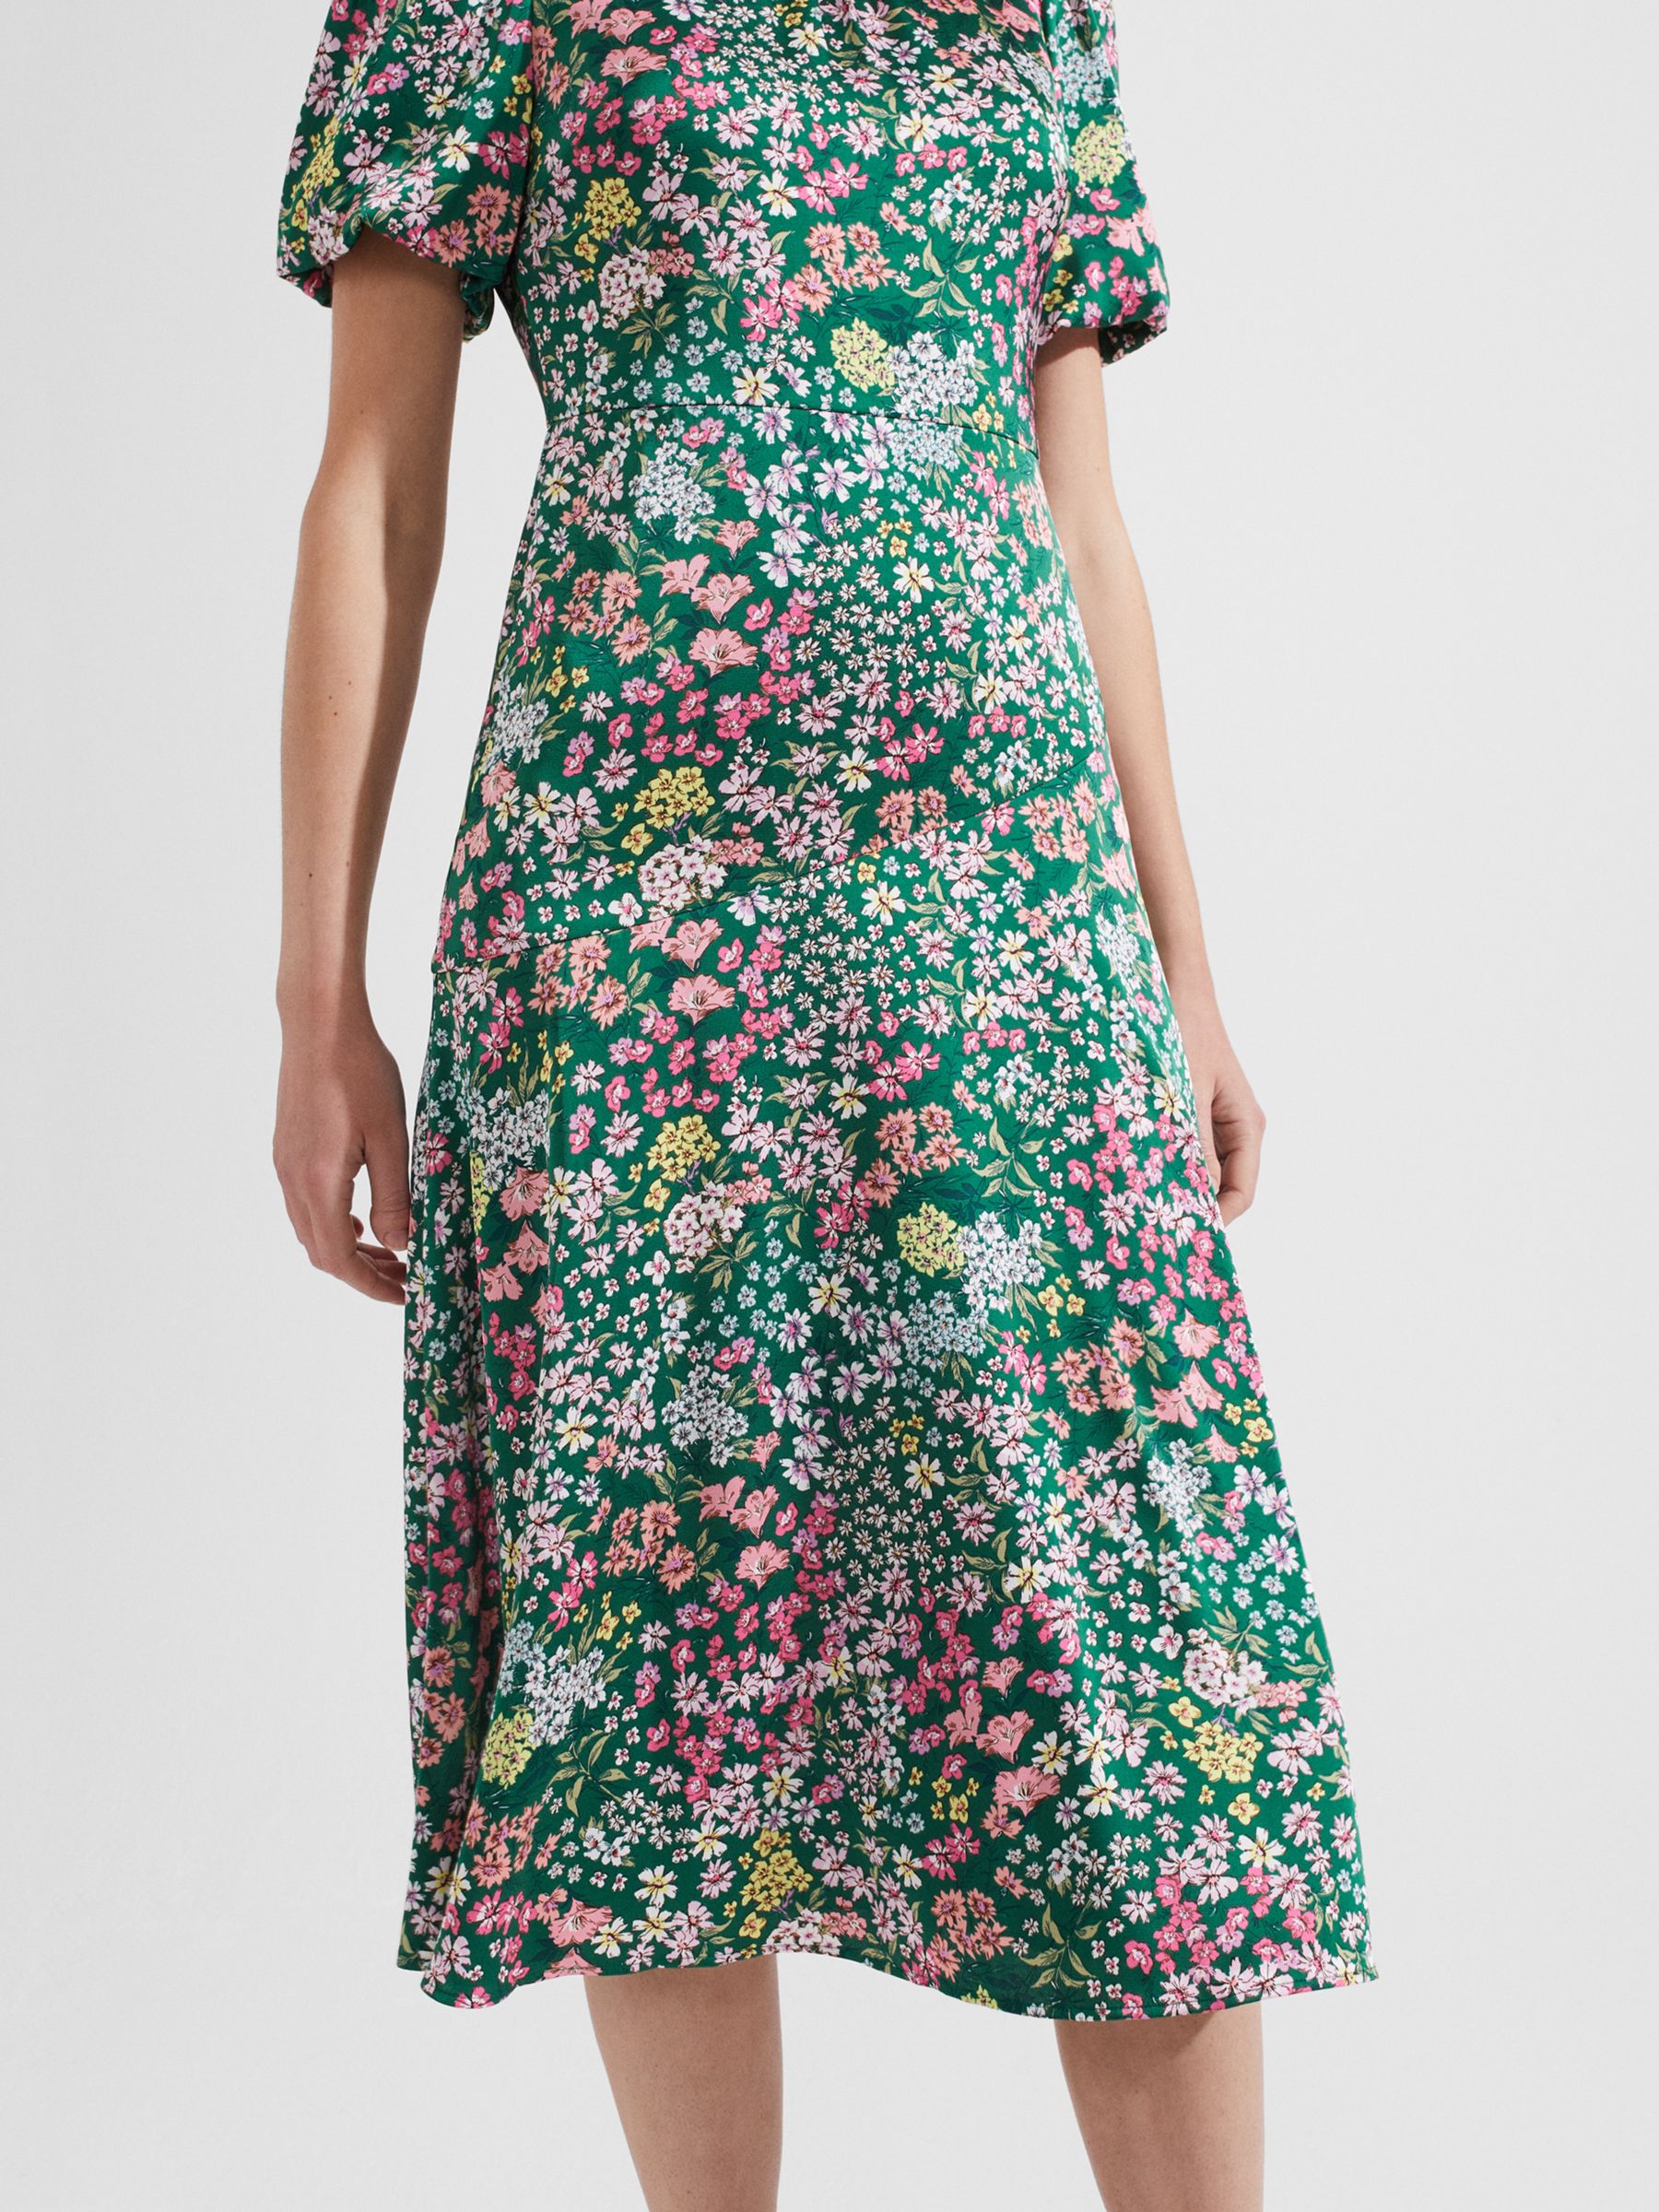 Hobbs Christina Midi Floral Dress, Green/Multi, 10